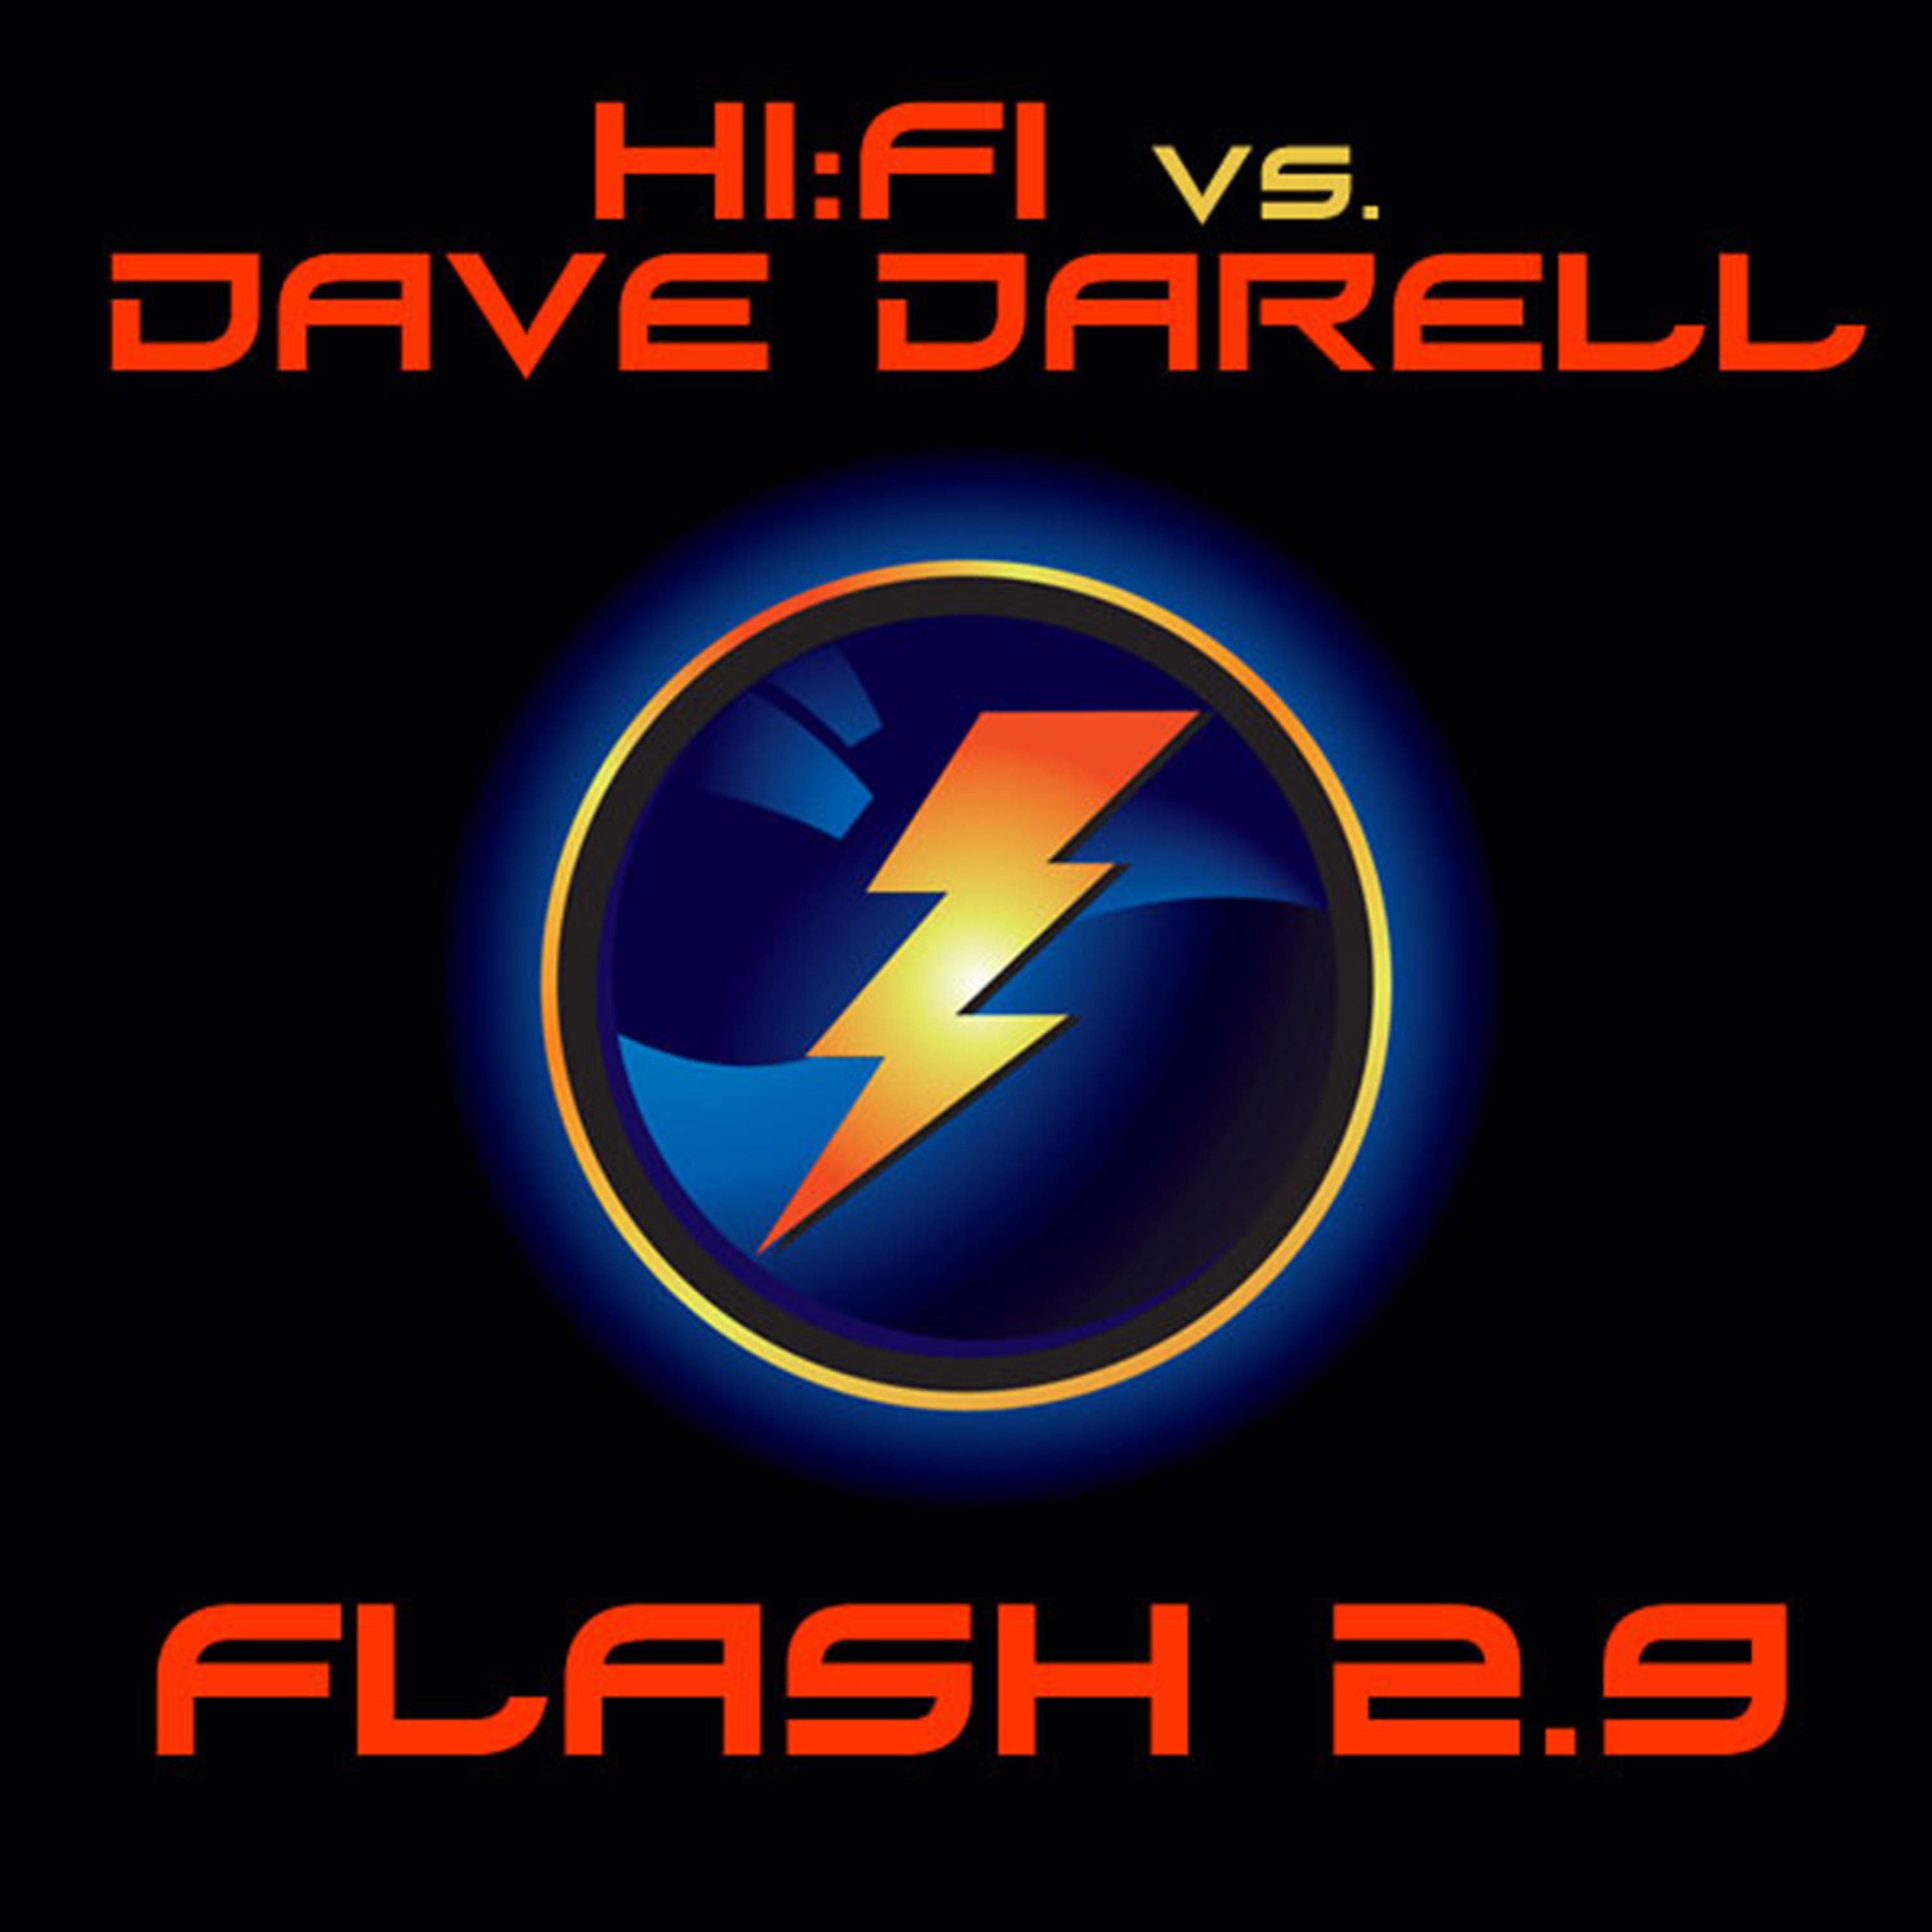 Flash 2.9 (Hi:Fi Club Radio Edit)